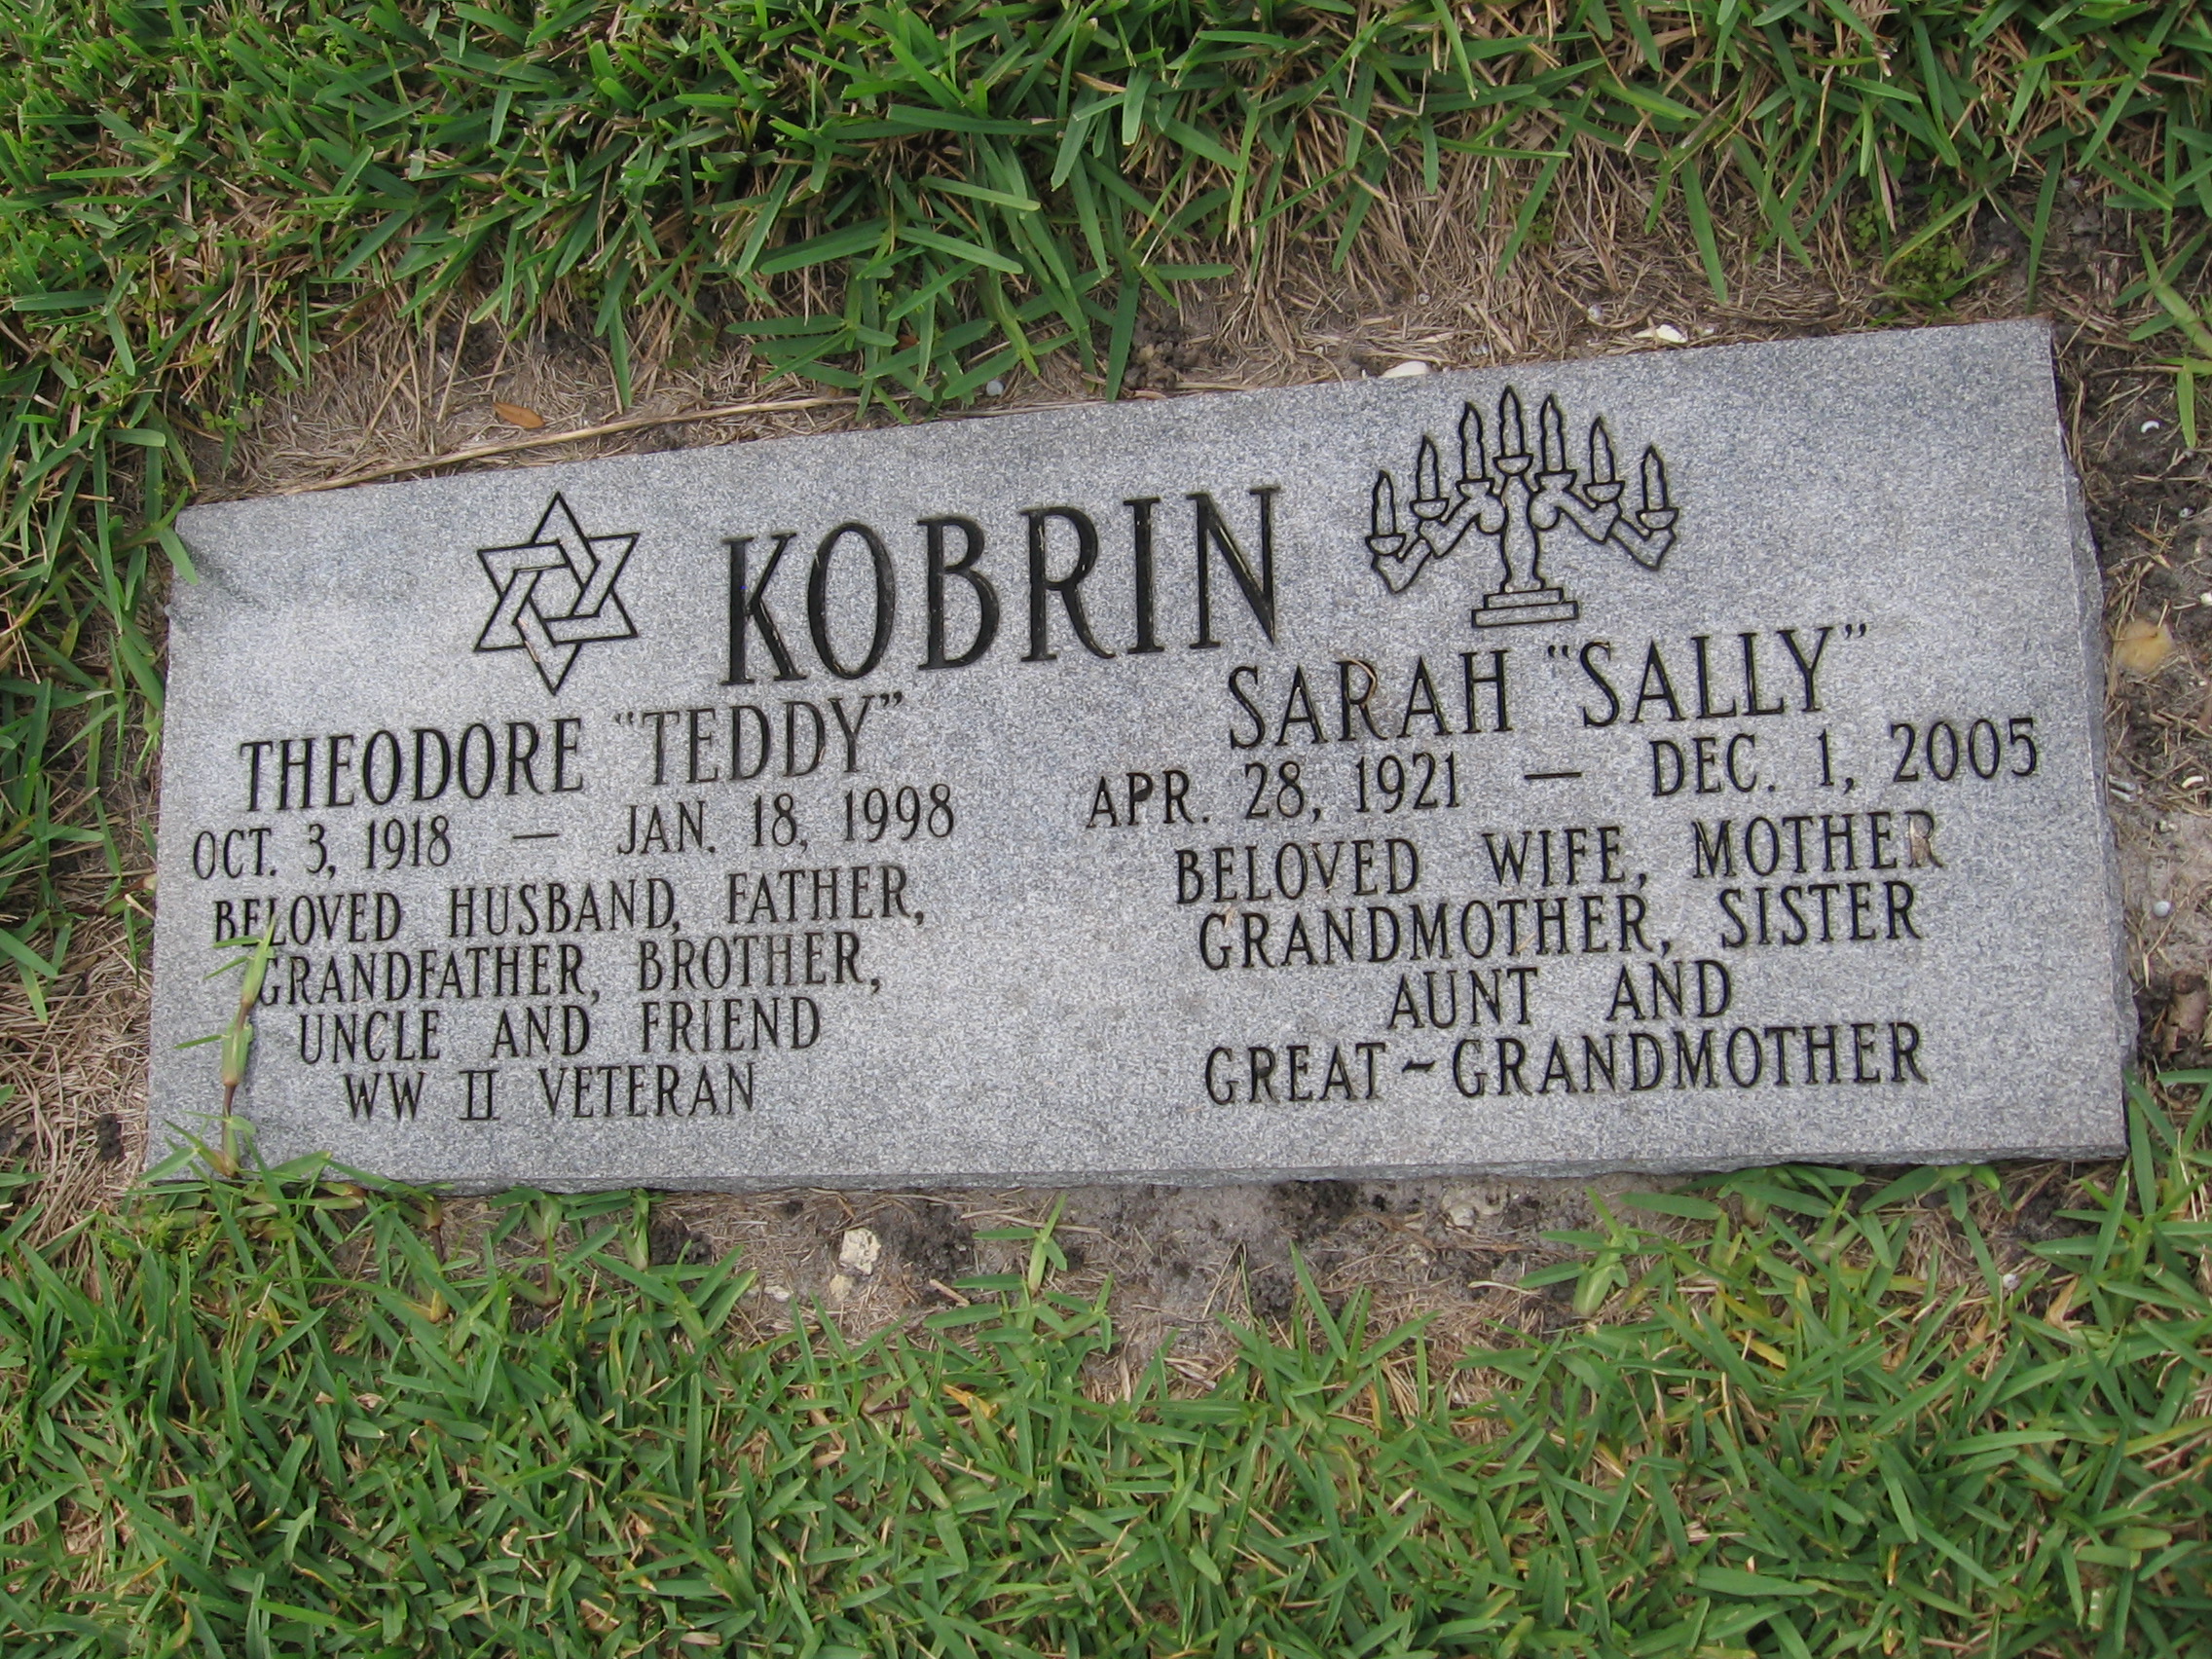 Sarah "Sally" Kobrin